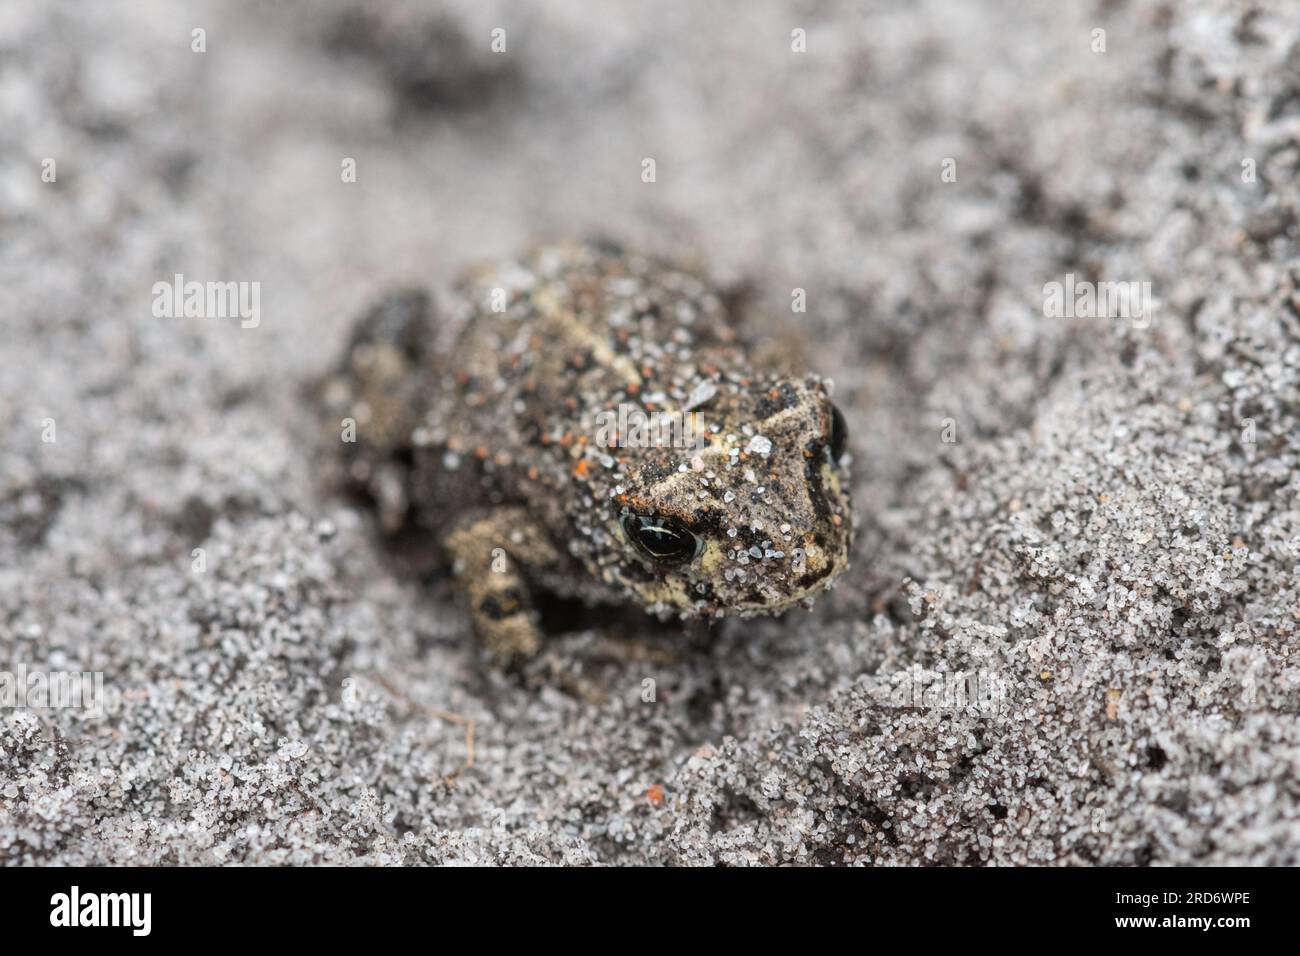 Natterjack toad (Epidalea calamita), a young toadlet in sand, Surrey, England, UK Stock Photo